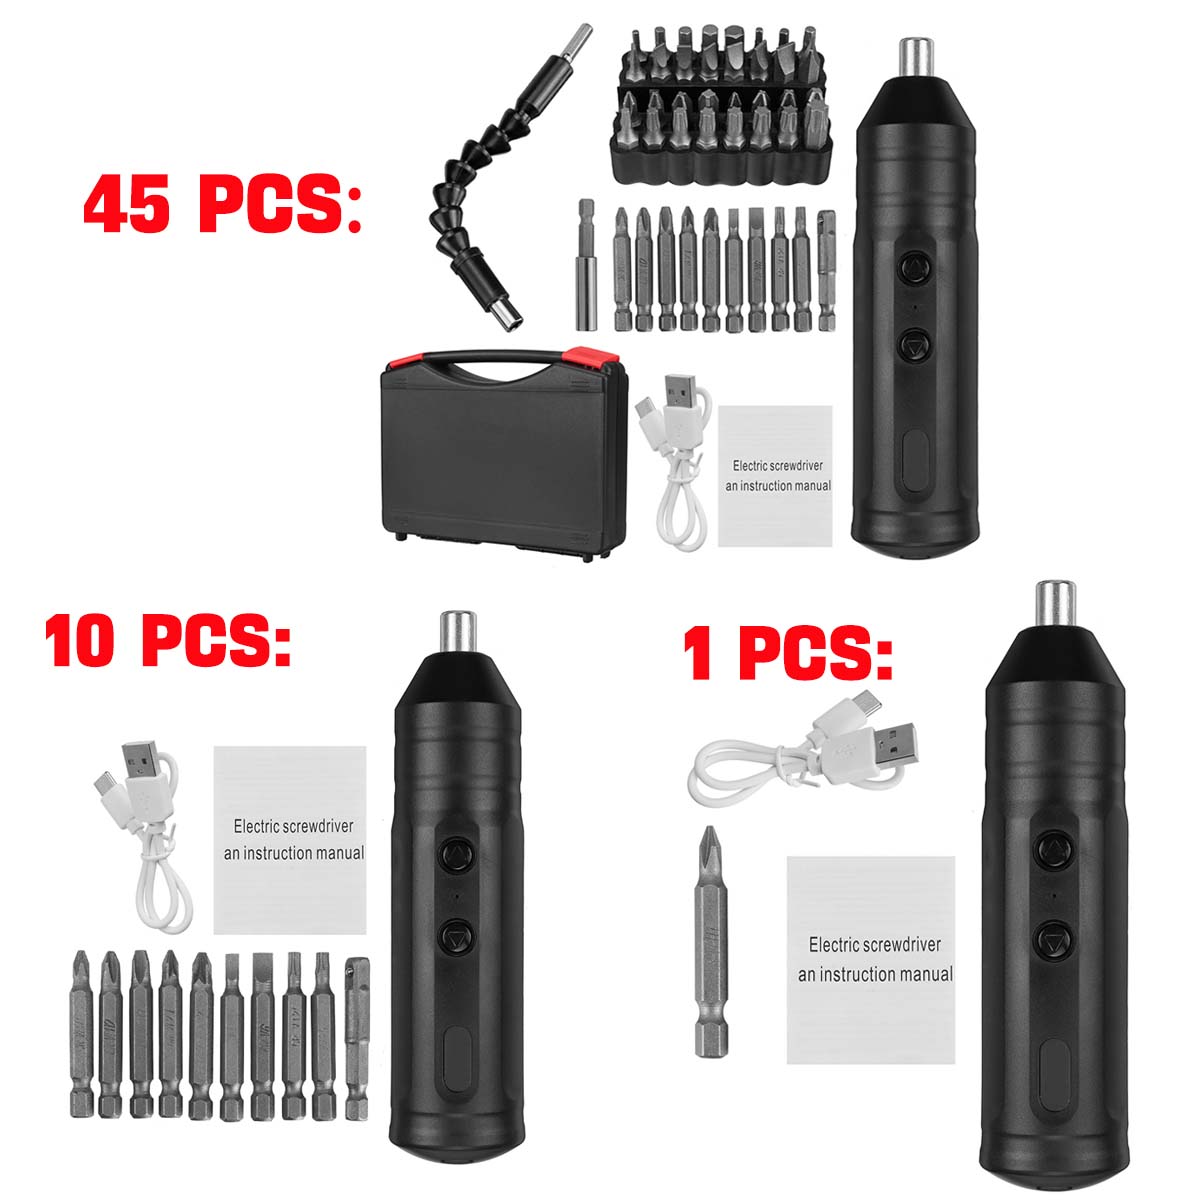 1PC10PCS45PCS-Portable-Mini-Electric-Screwdriver-Smart-Cordless-Automatic-Screwdriver-Multi-function-1939032-2